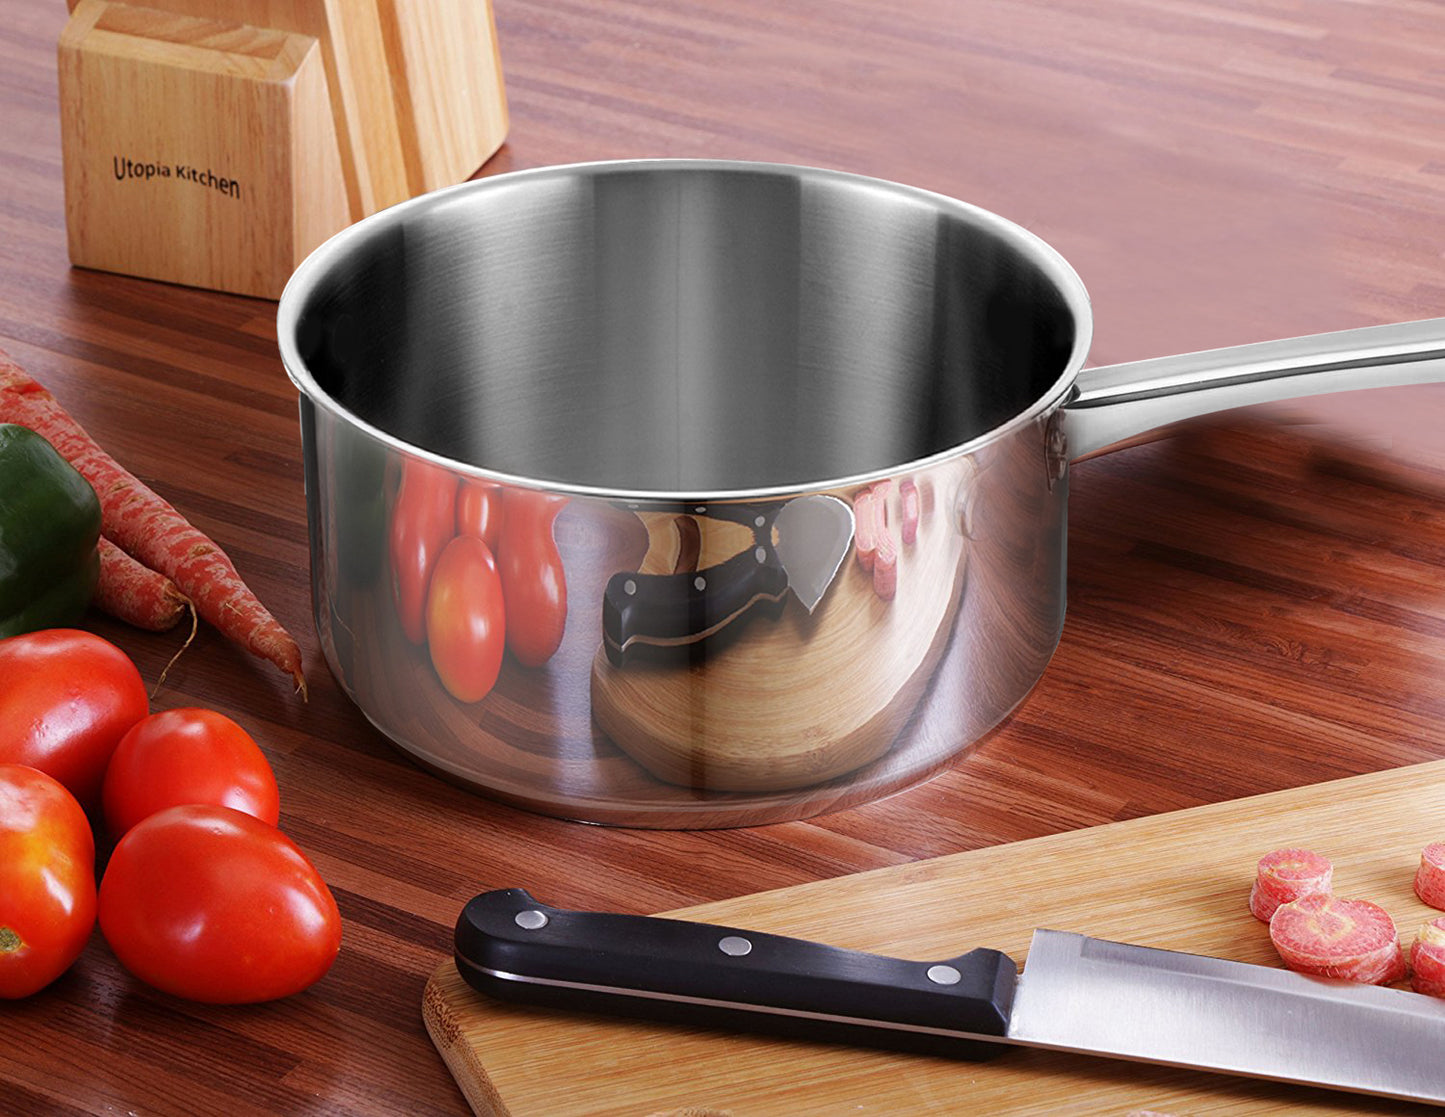 Sauce Pan with Glass Lid Wooden Handle Nonstick Aluminum Small Pot